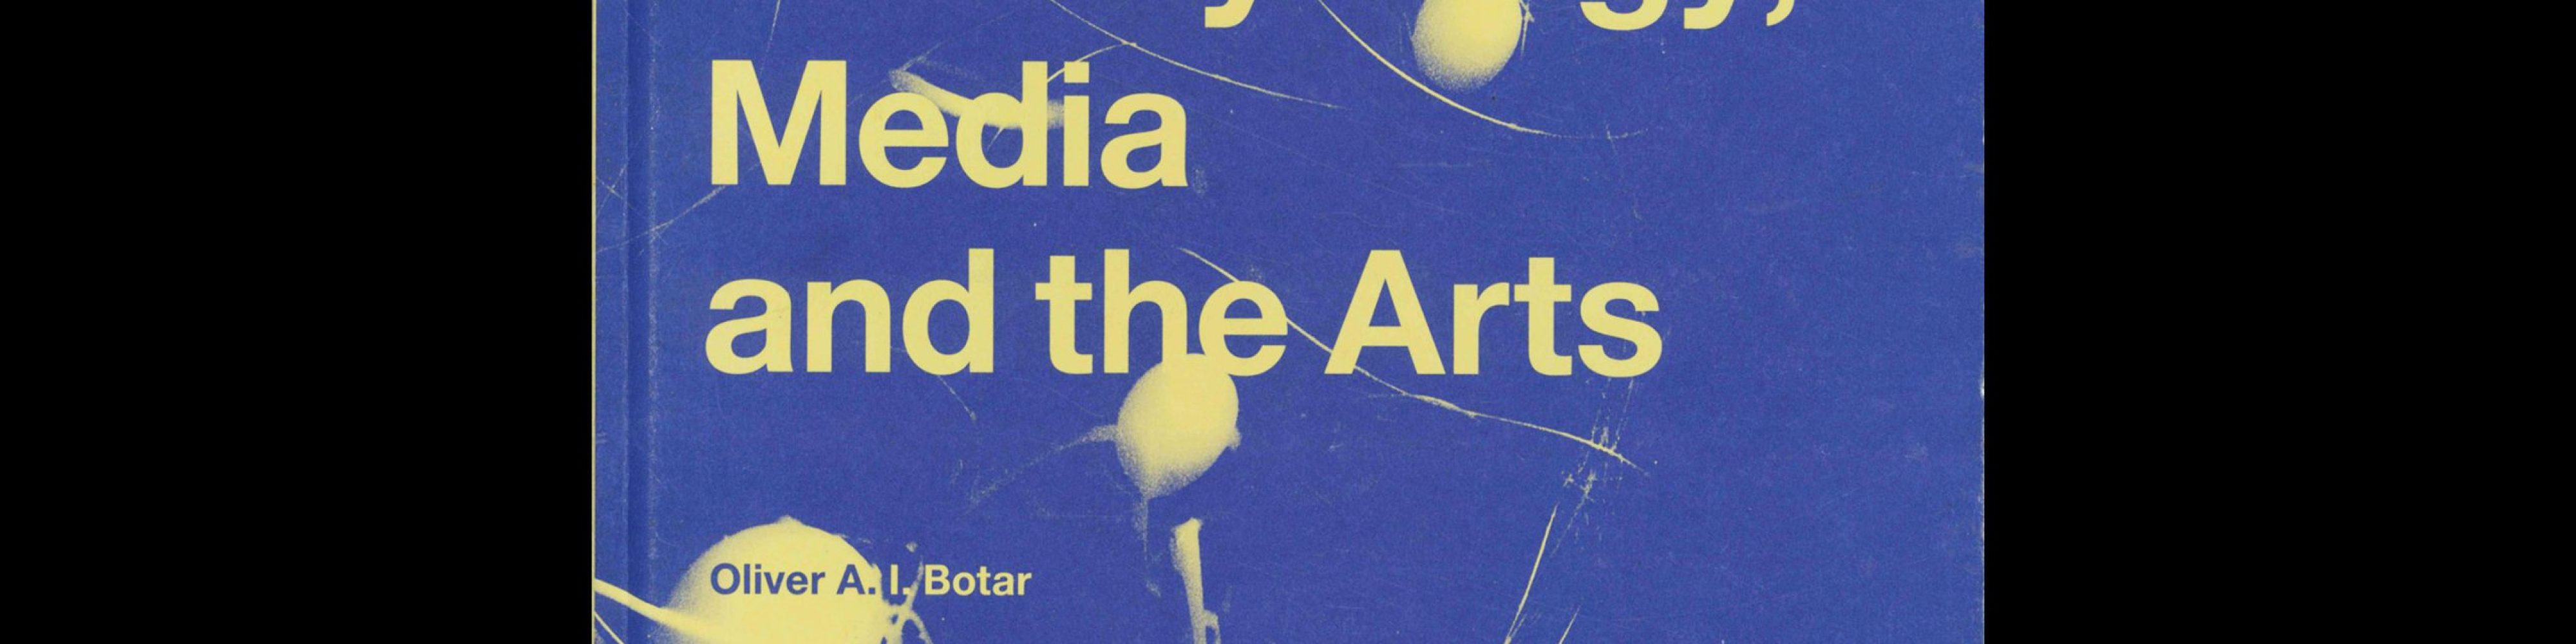 Sensing the Future: Moholy-Nagy, Media and the Arts, 2014